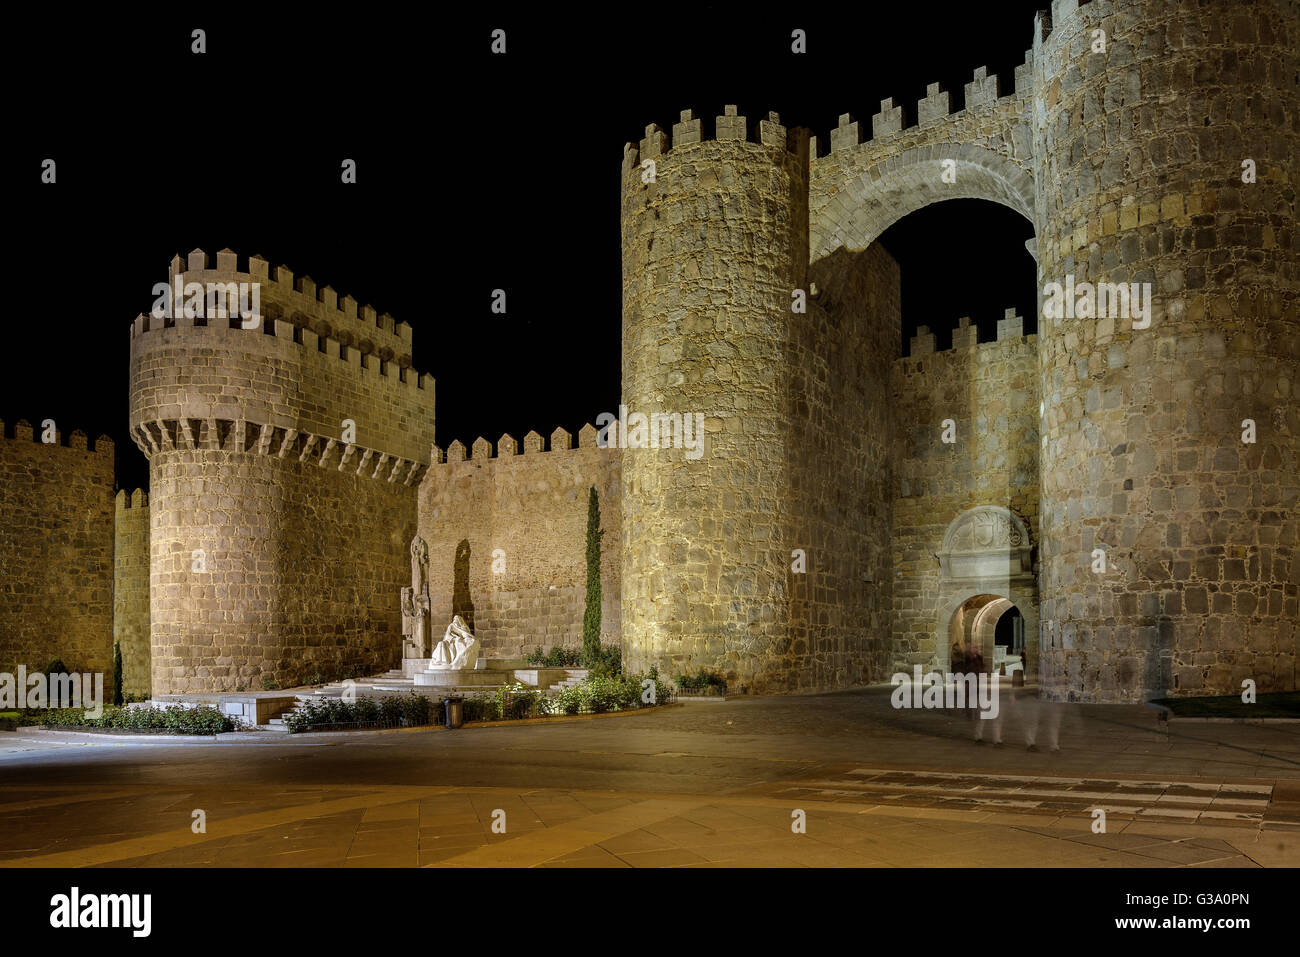 Plaza of Santa Teresa and gate Alcazar in the wall of the city of Avila, Castile and Leon, Spain, Stock Photo